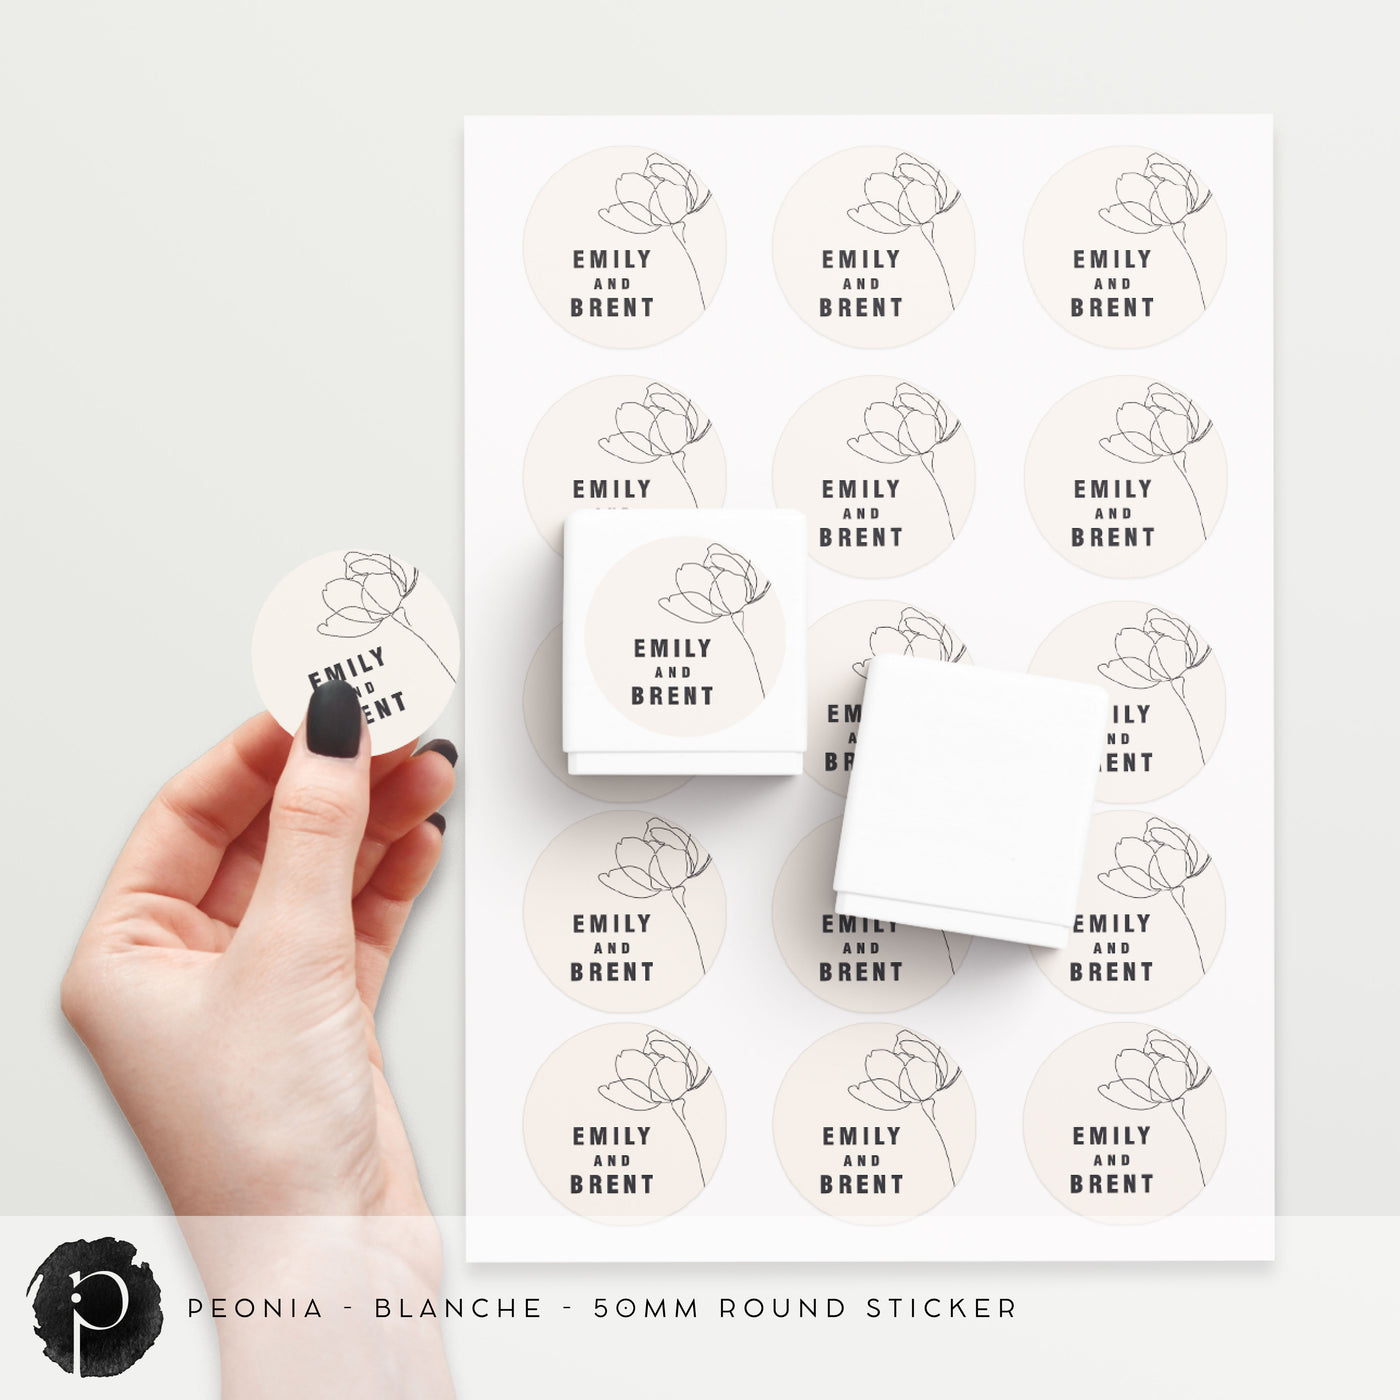 Peonia - Stickers/Seals